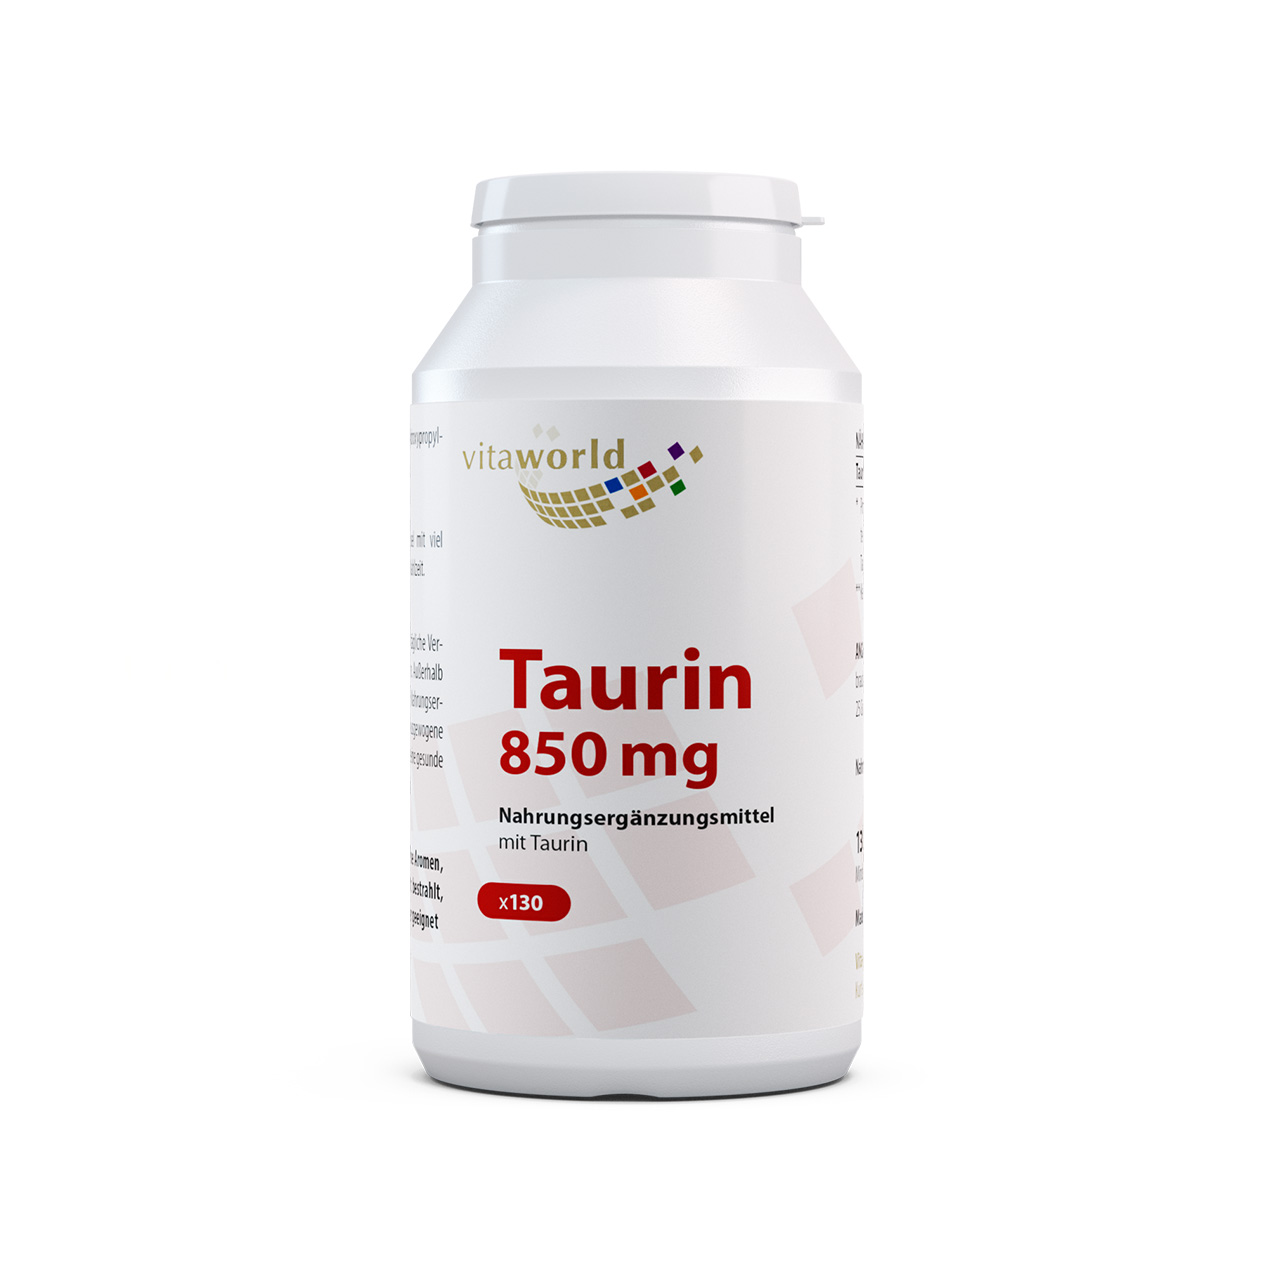 Vitaworld Taurin 850mg | 130 Kapseln | Apotheken Herstellung | vegan | gluten- und laktosefrei